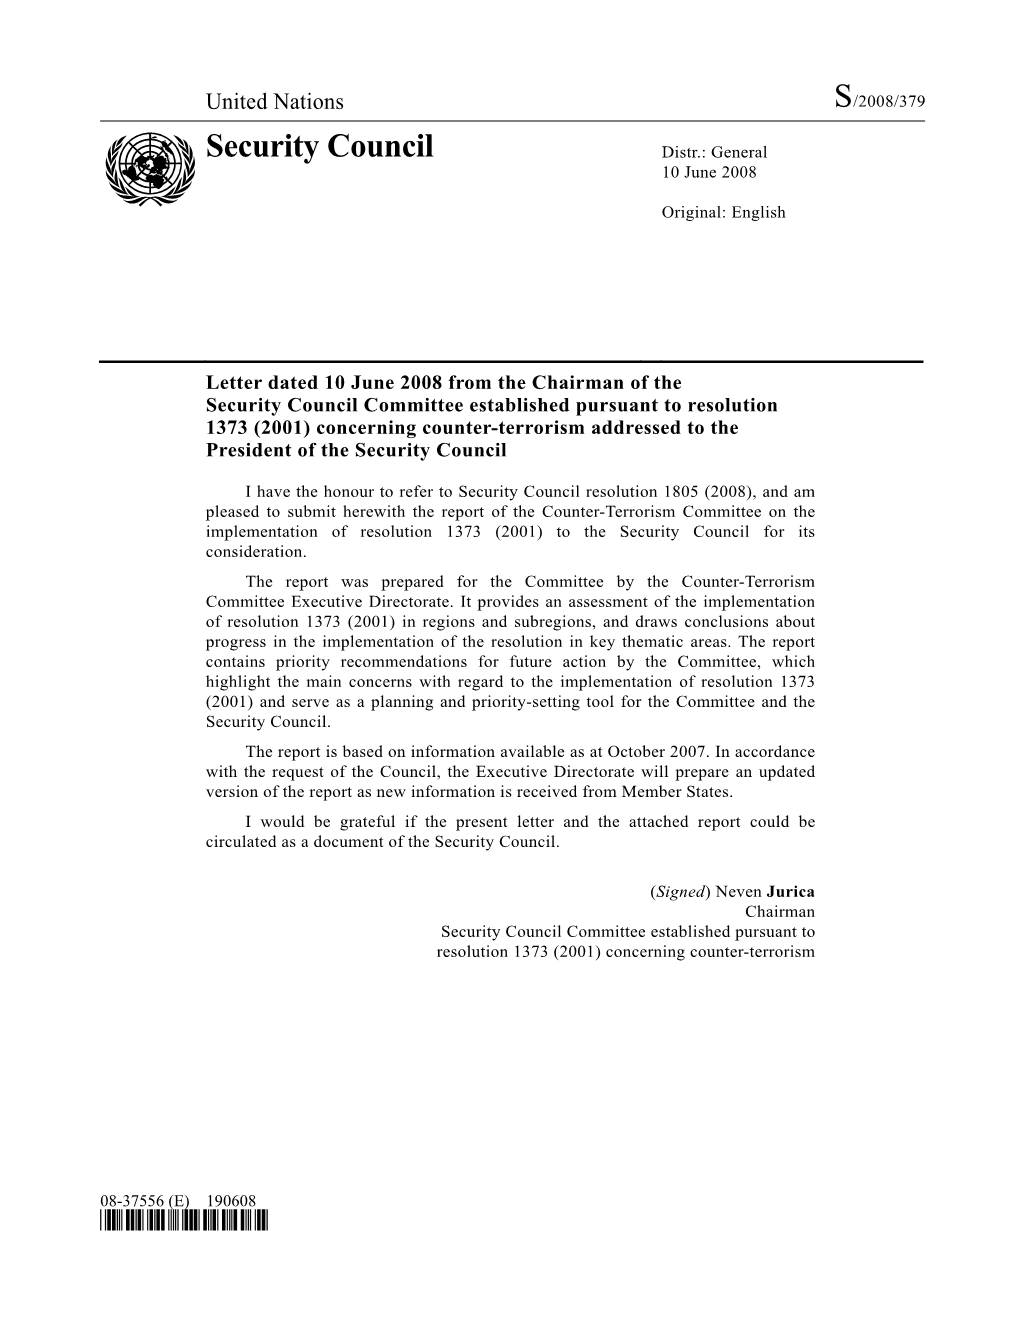 Security Council Distr.: General 10 June 2008